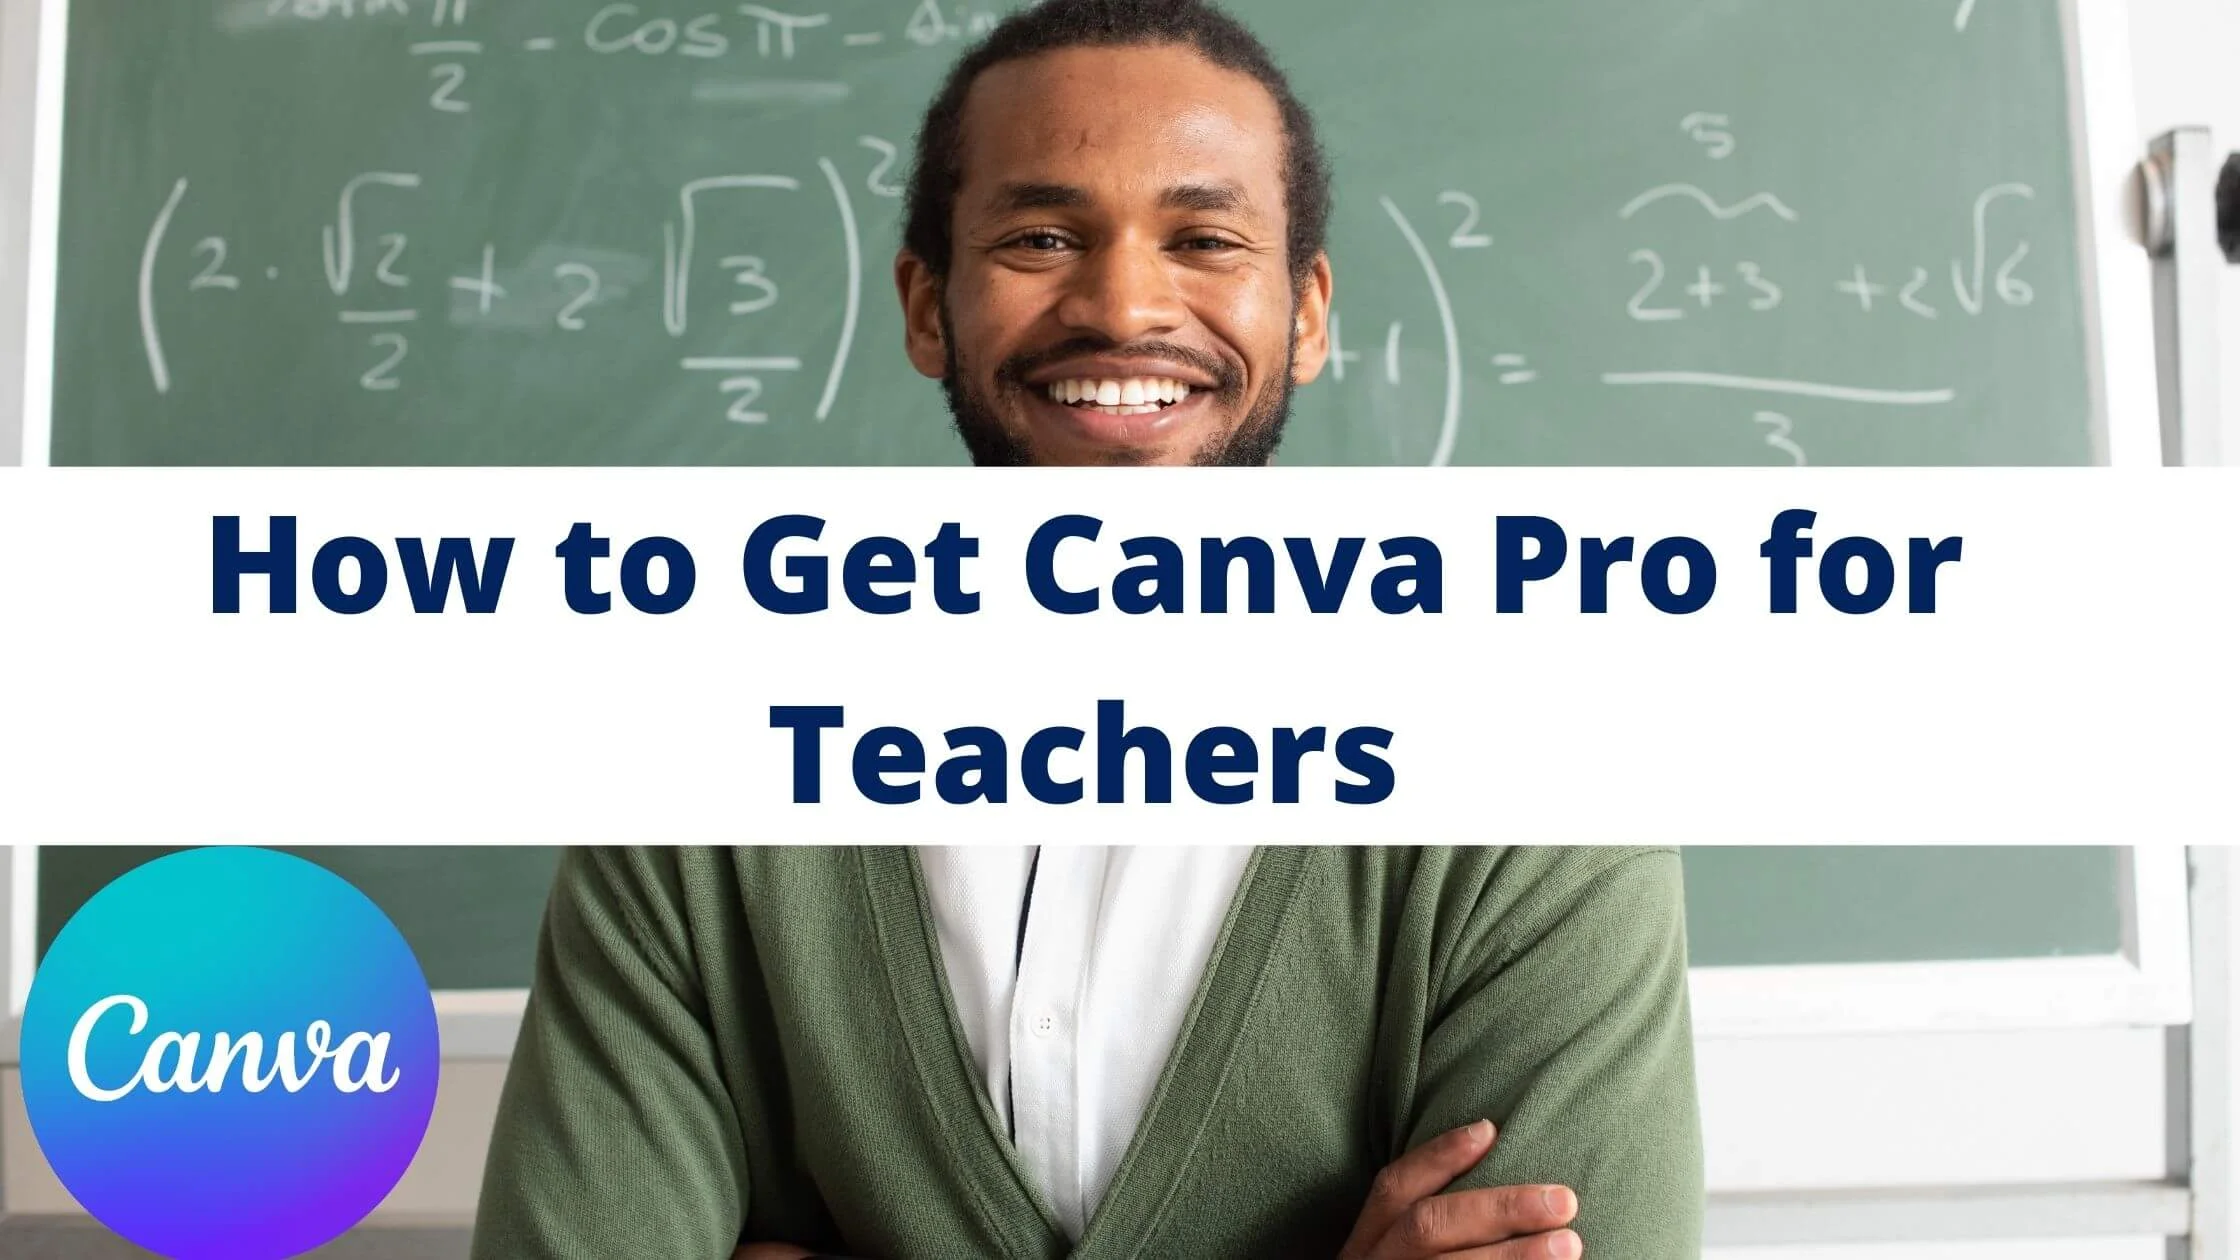 Canva Pro for Teachers